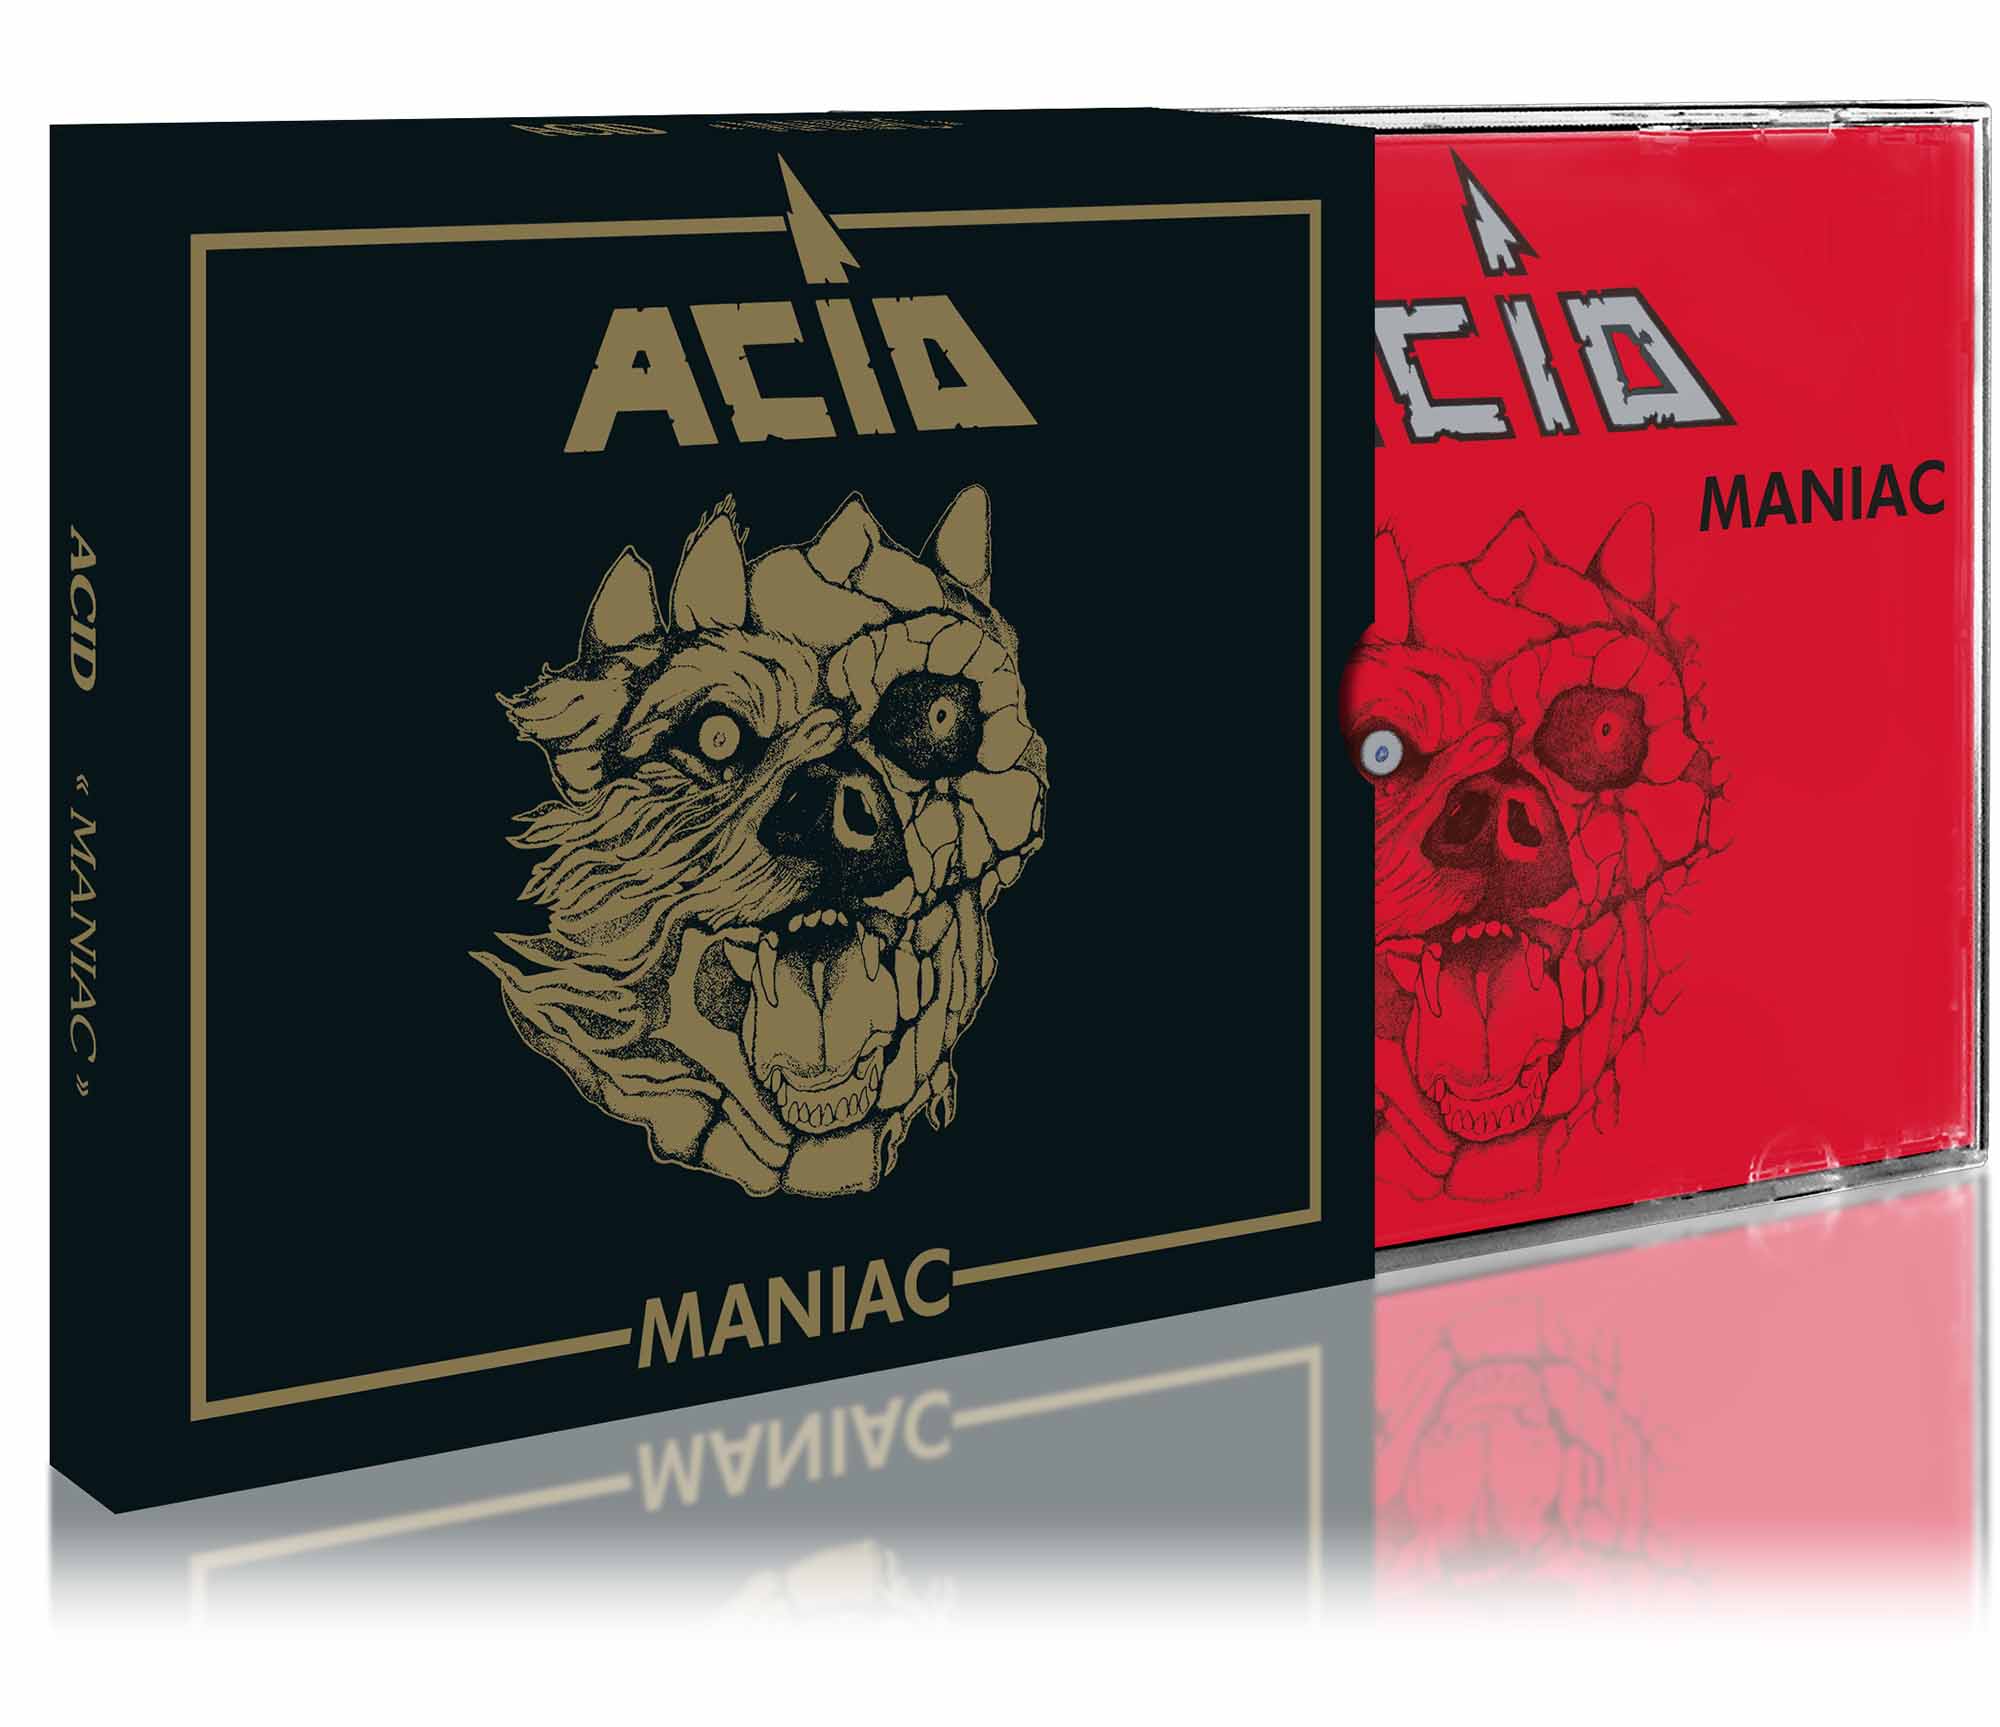 ACID - Maniac  CD